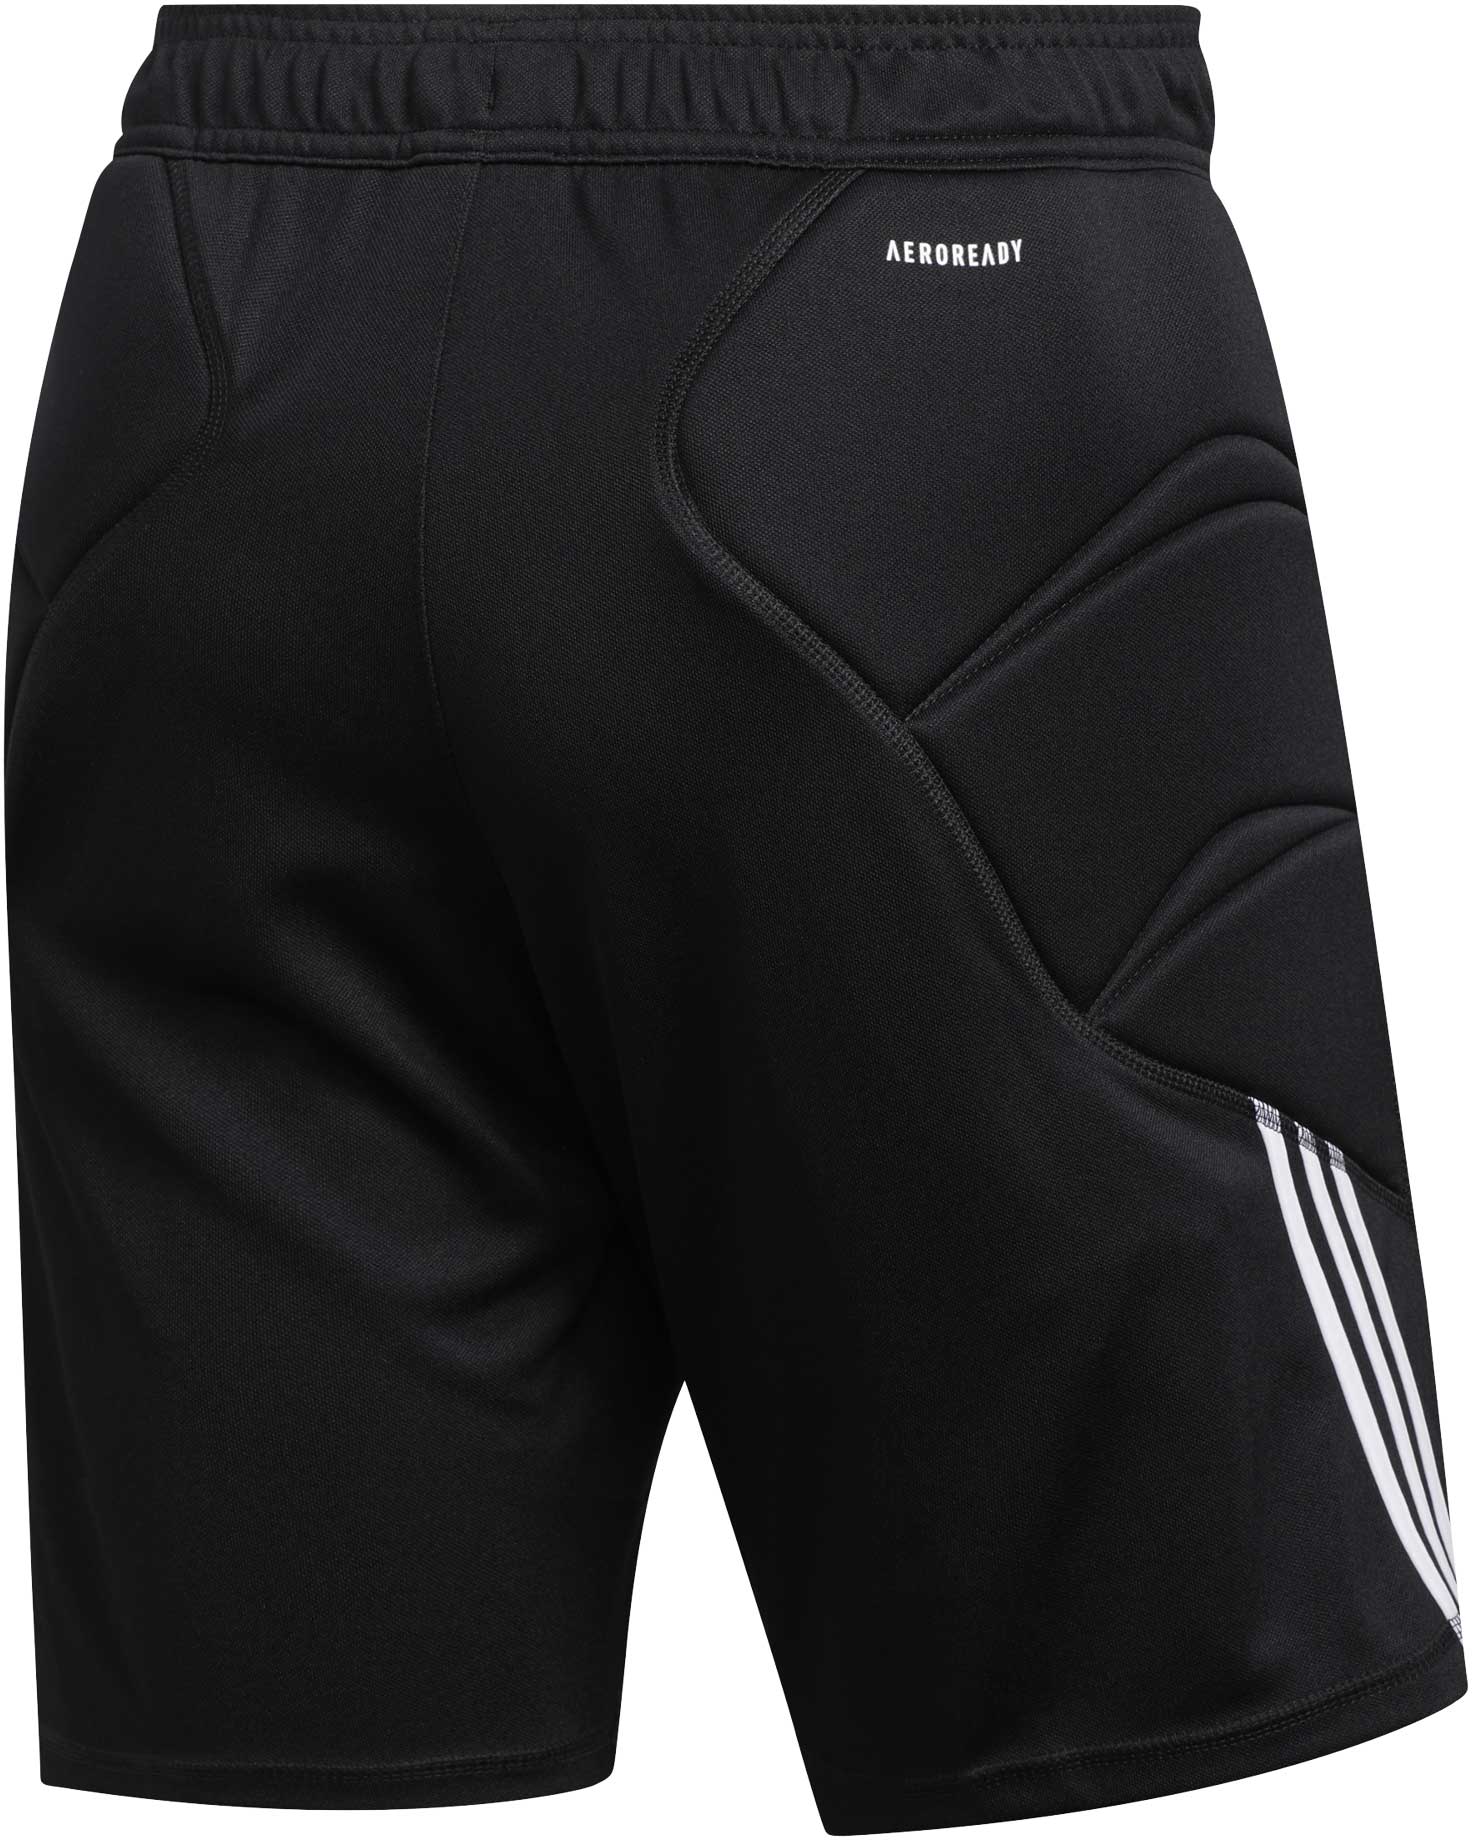 Men’s goalkeepers’ shorts